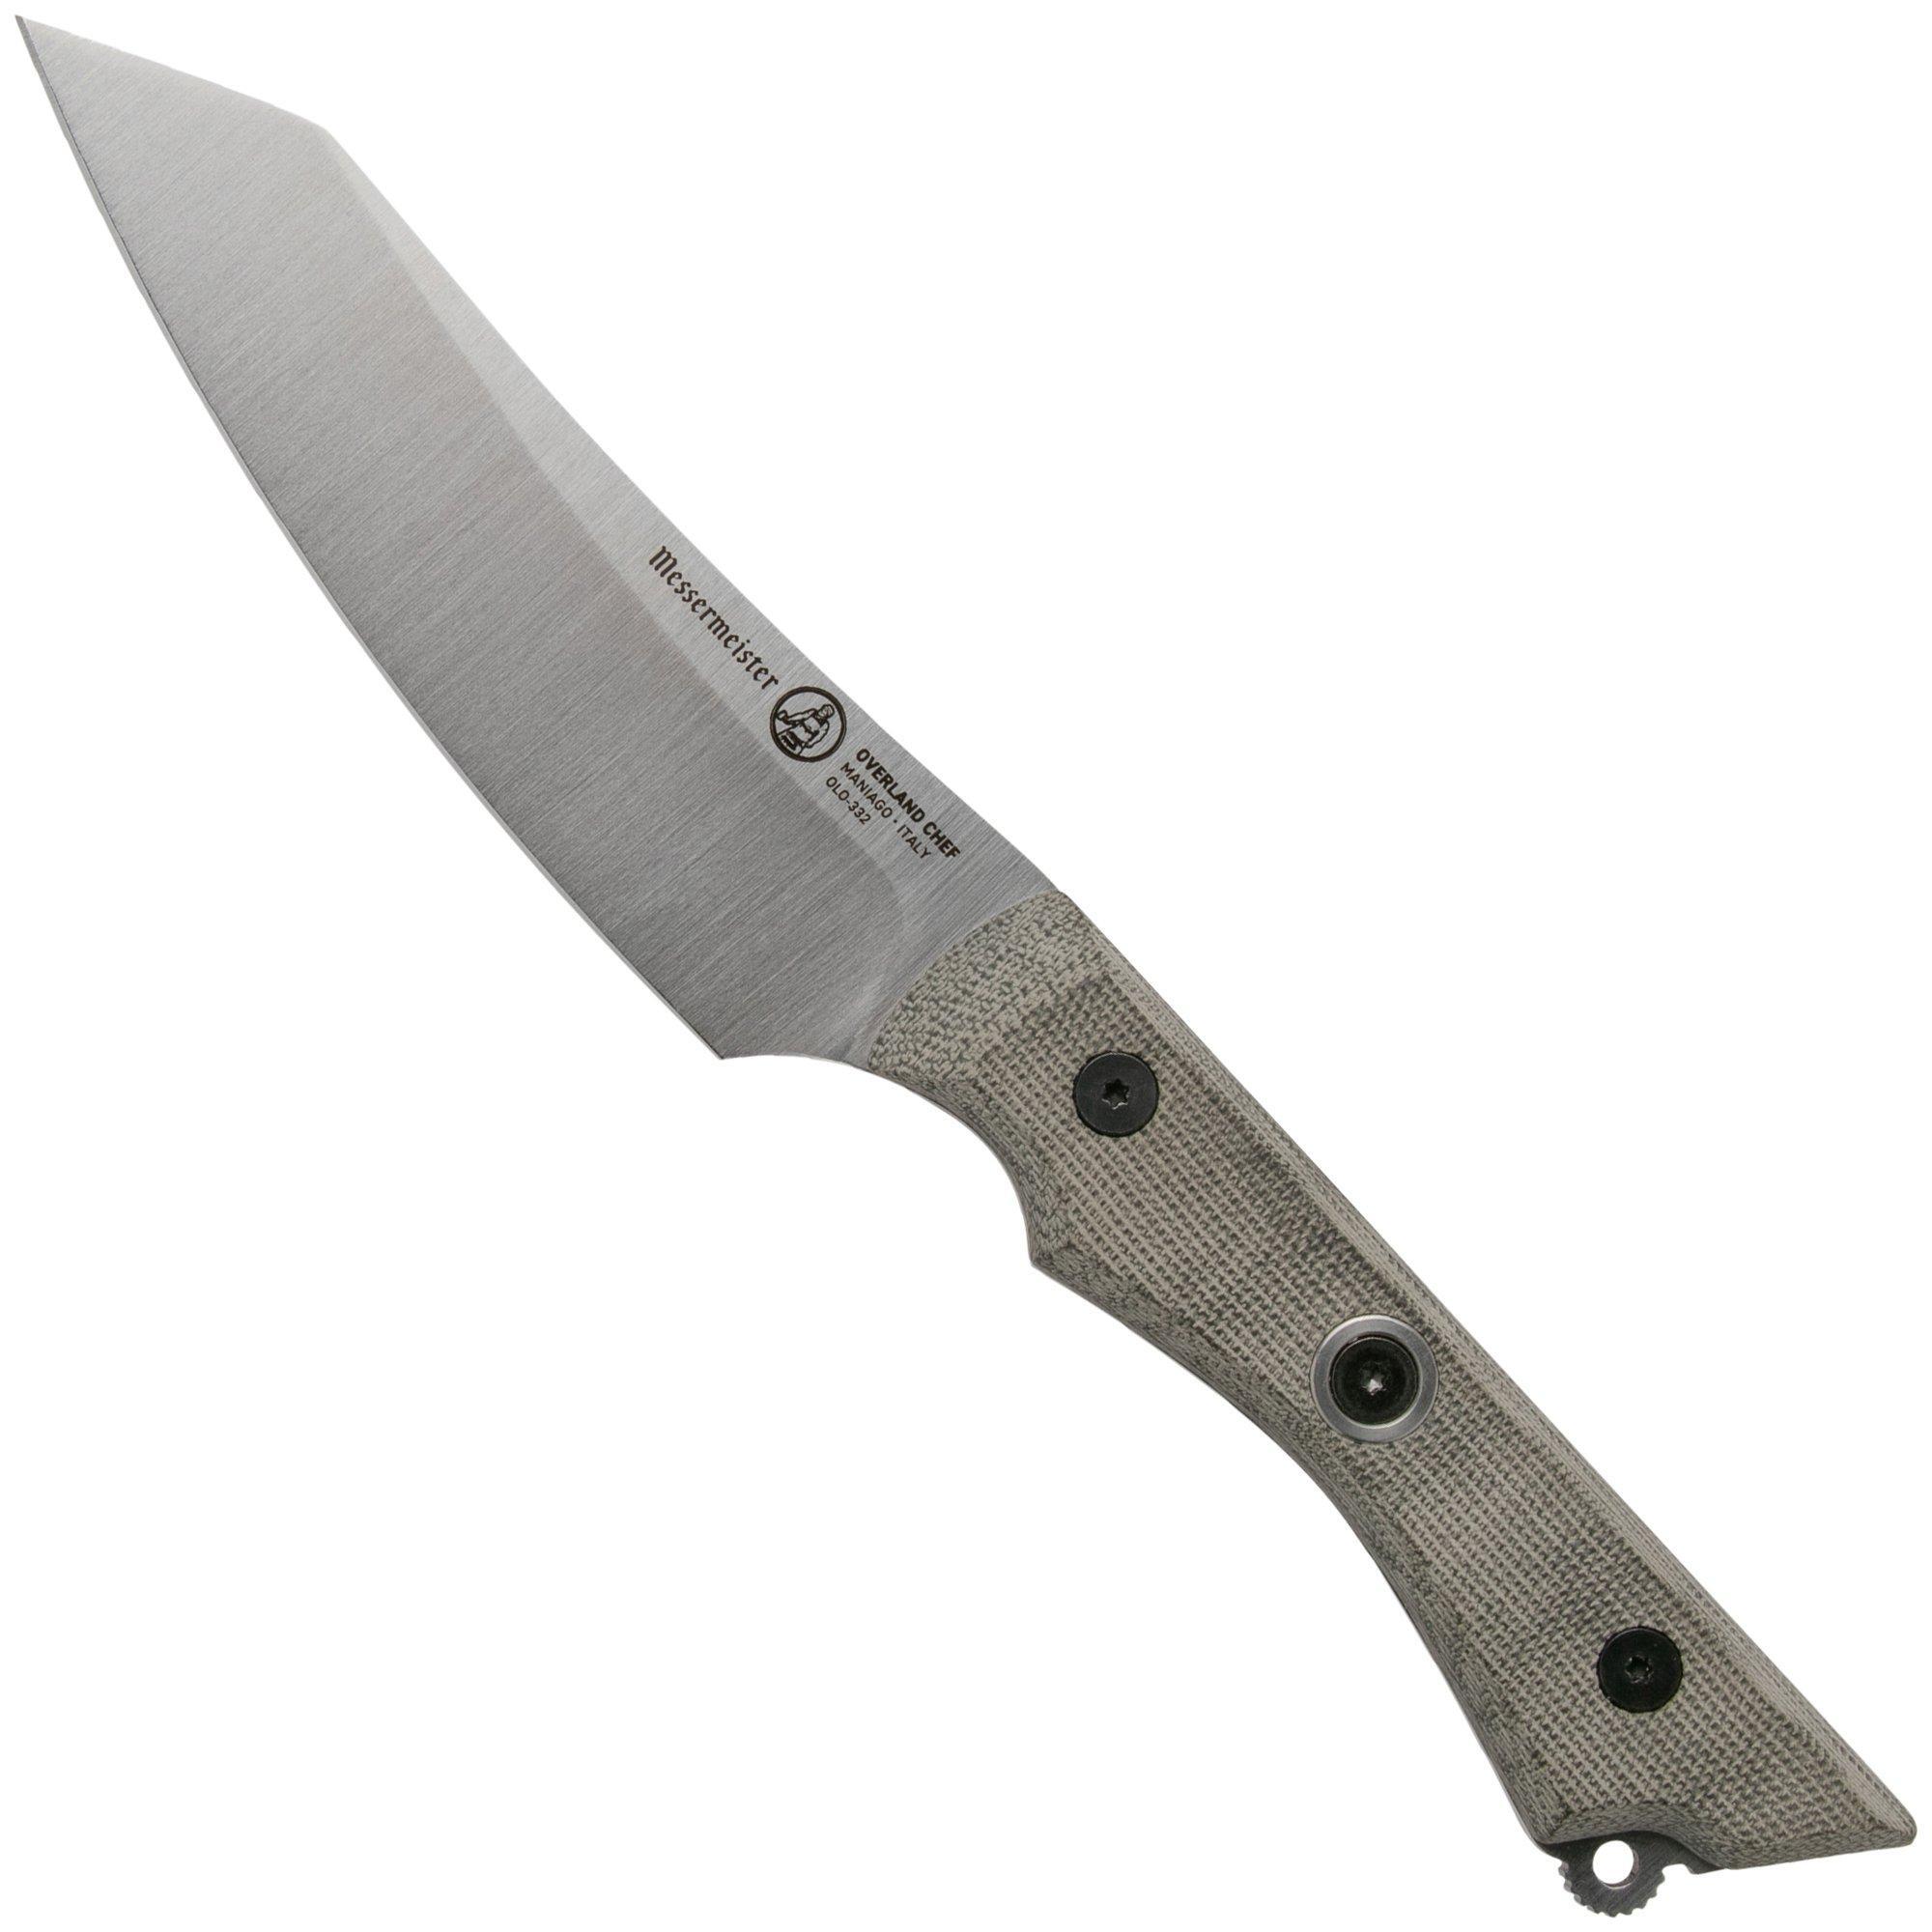 Messermeister Overland Utility Knife 4.5? OLO-332 outdoor keukenmes, 11.5 cm